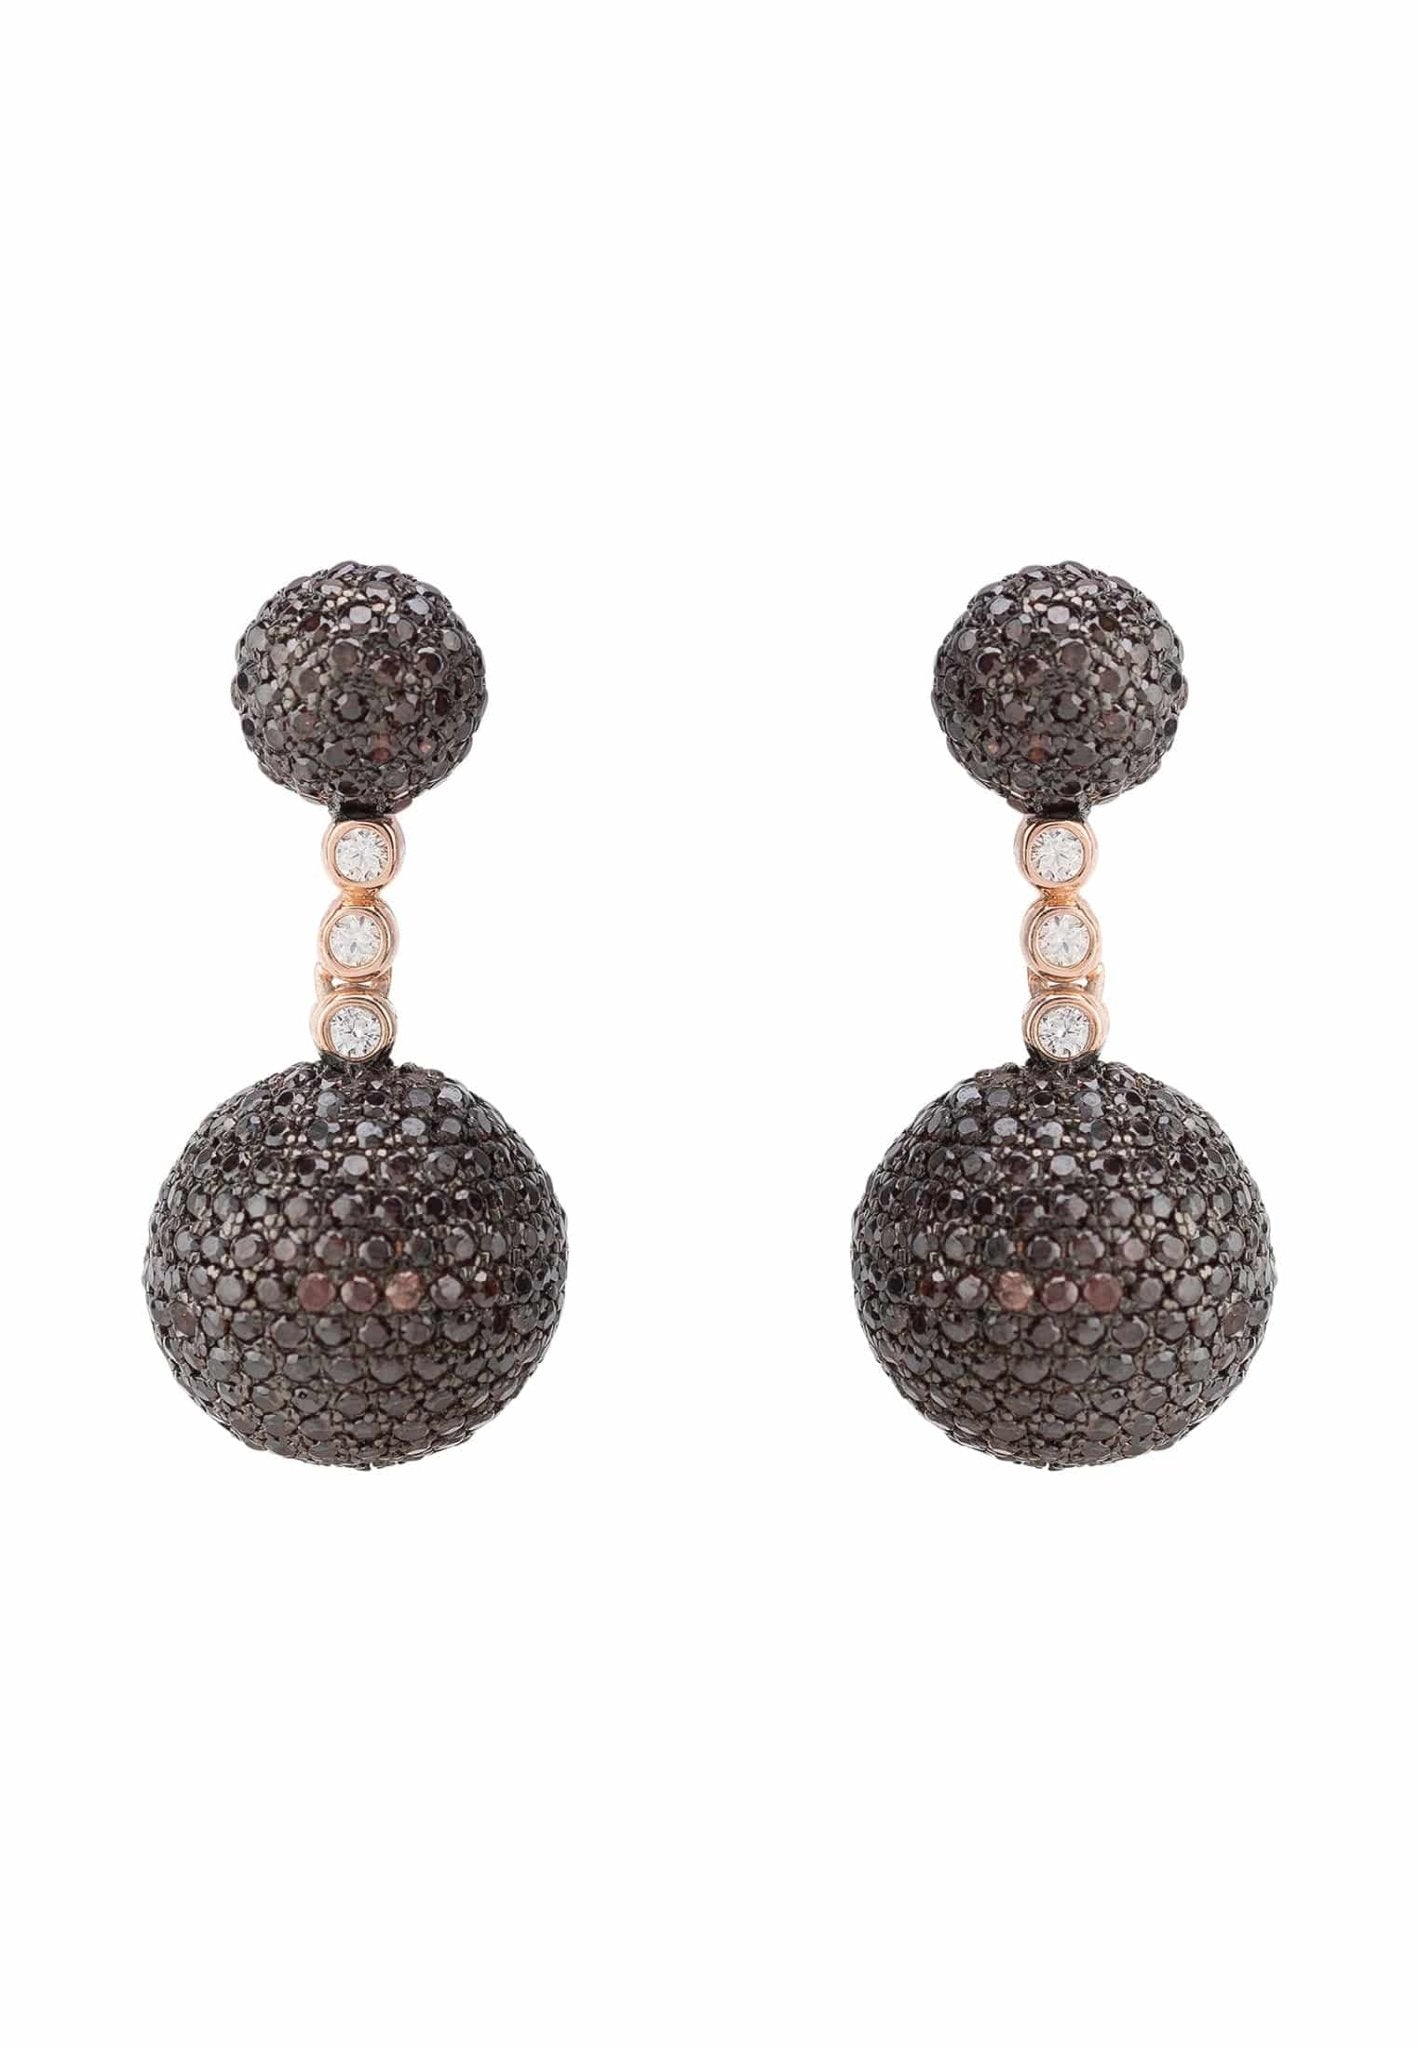 Monaco Sphere Drop Earrings Rosegold Chocolate Brown Cz - LATELITA Earrings